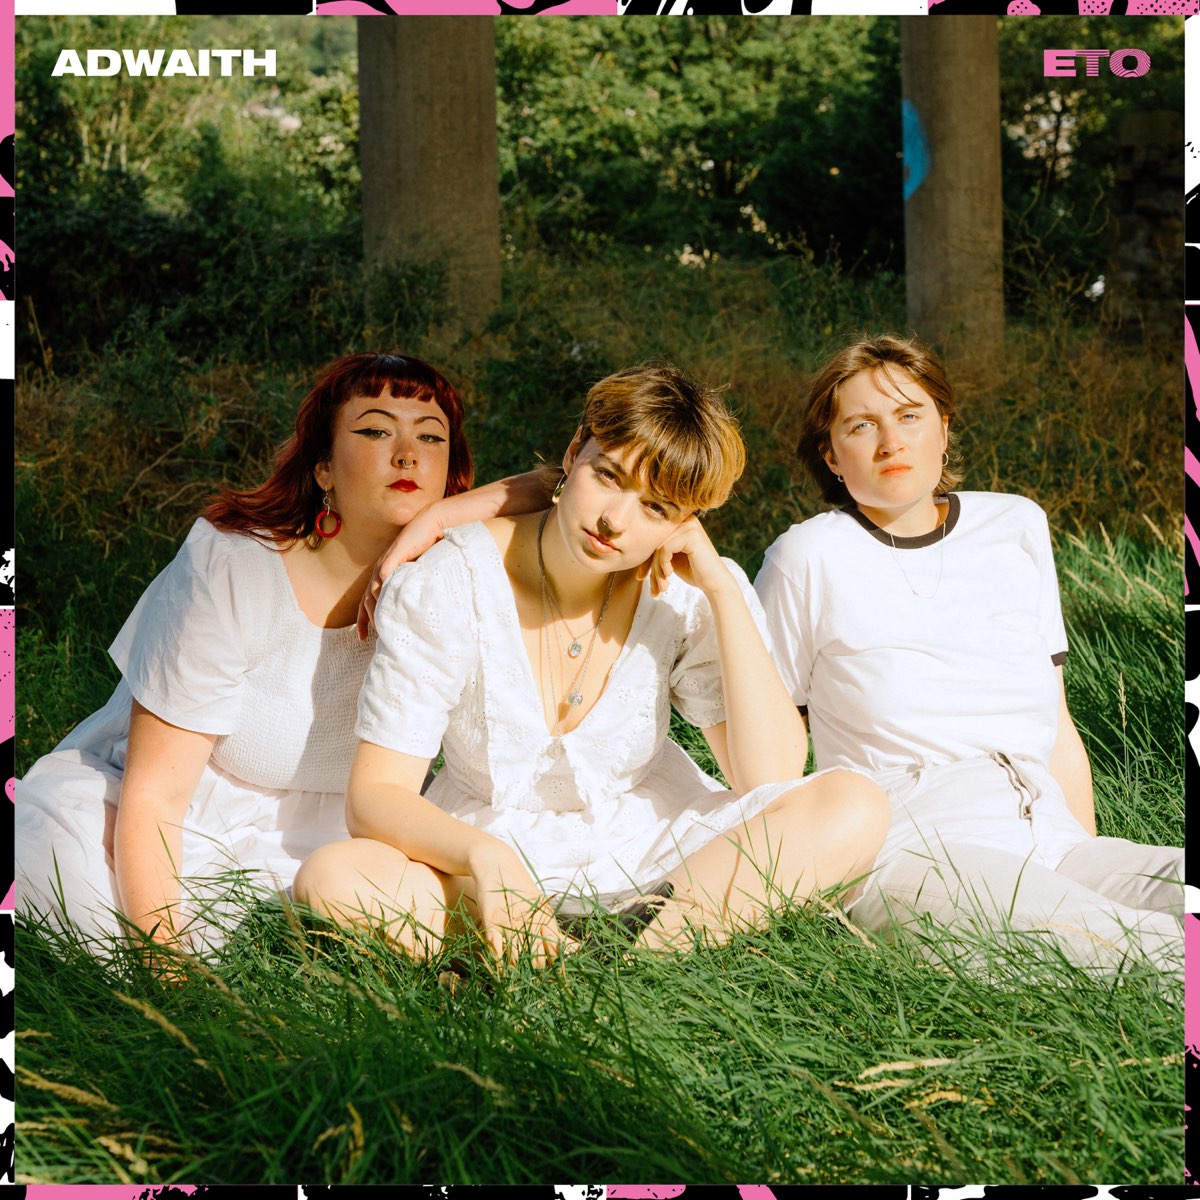 ‎ETO - Single by Adwaith on Apple Music